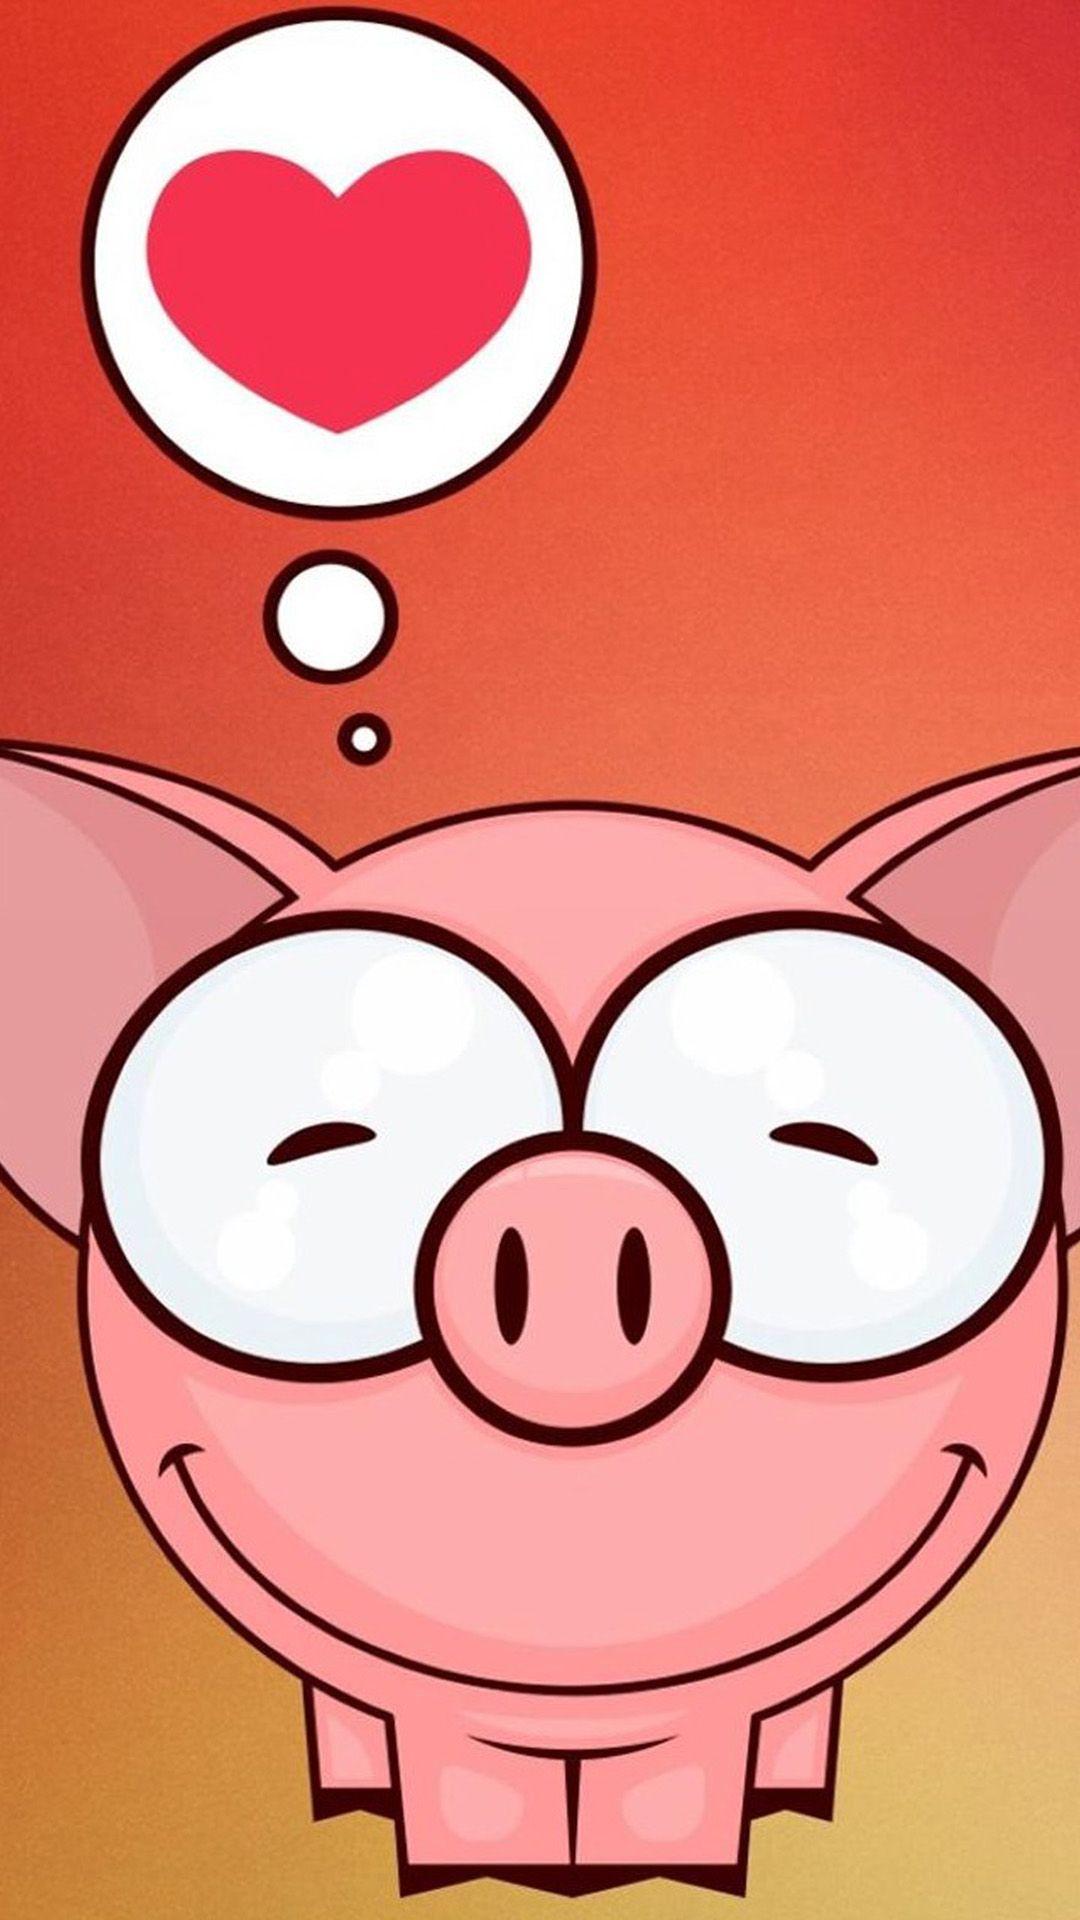 Cute Kawaii Pig Galaxy S5 Wallpaper 1080x1920